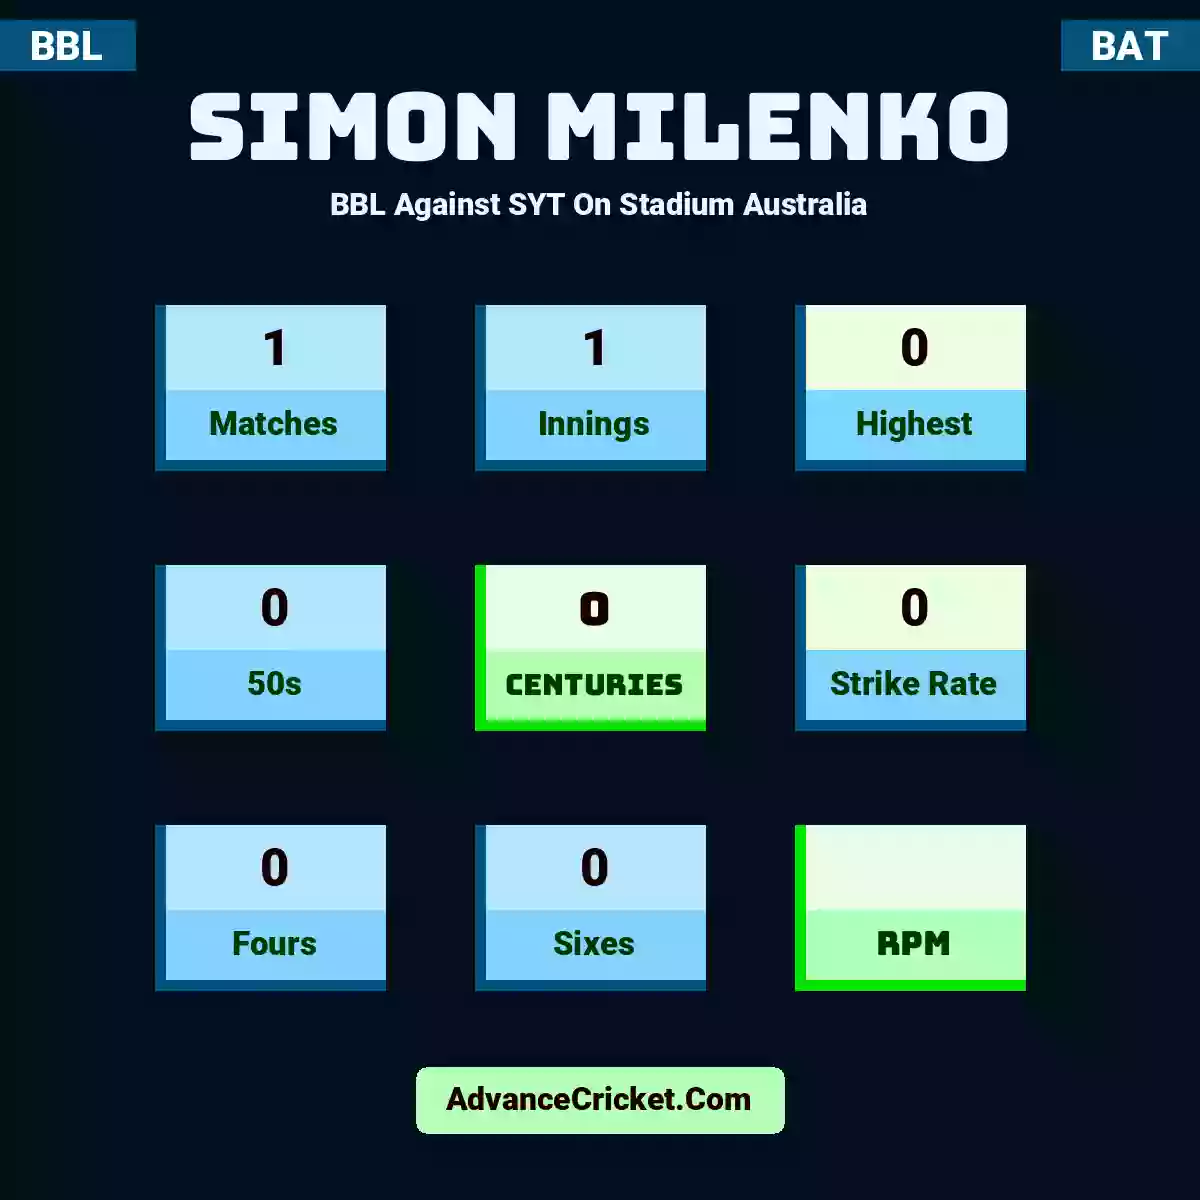 Simon Milenko BBL  Against SYT On Stadium Australia, Simon Milenko played 1 matches, scored 0 runs as highest, 0 half-centuries, and 0 centuries, with a strike rate of 0. S.Milenko hit 0 fours and 0 sixes.